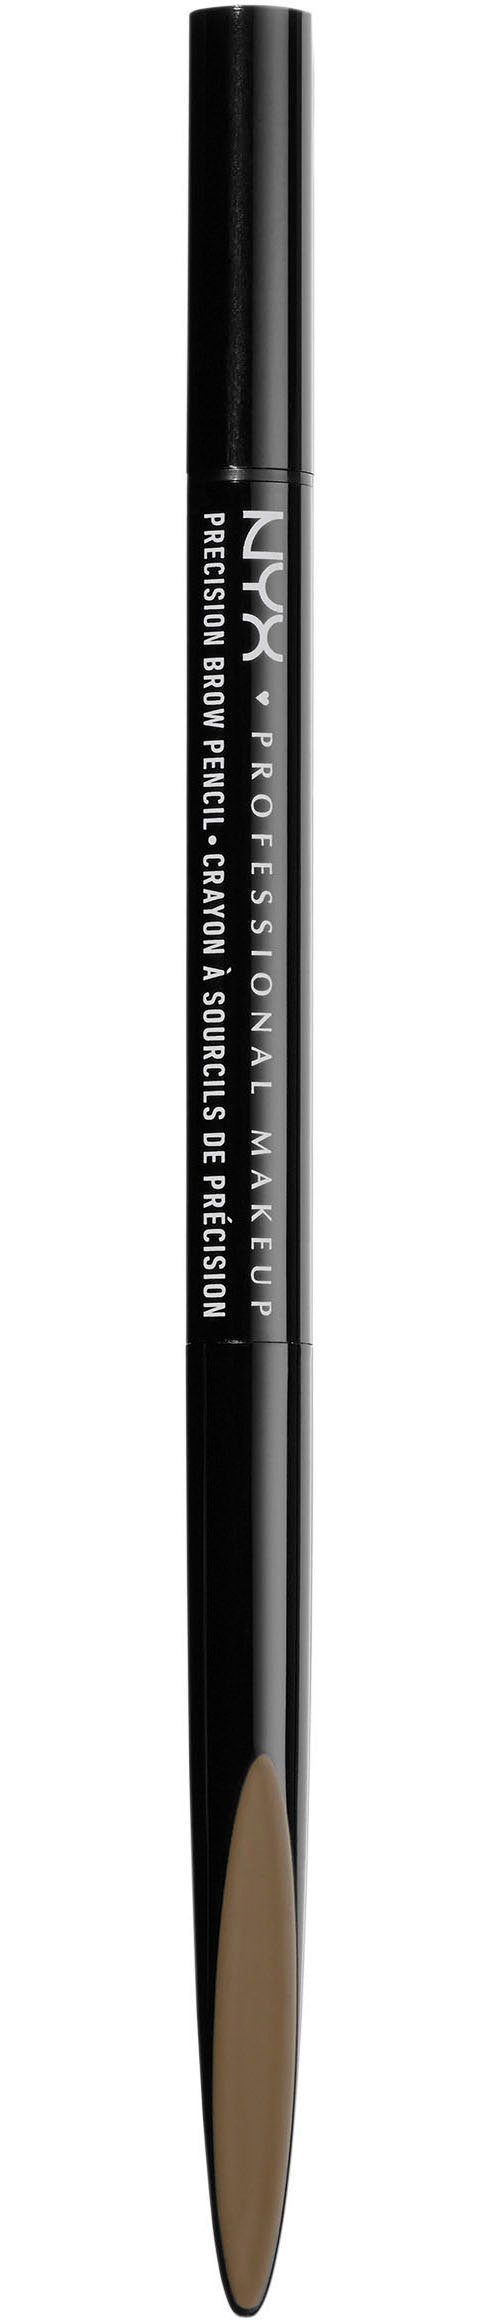 【Fachgeschäft】 NYX Augenbrauen-Stift Pencil Professional Brow espresso Precision Makeup